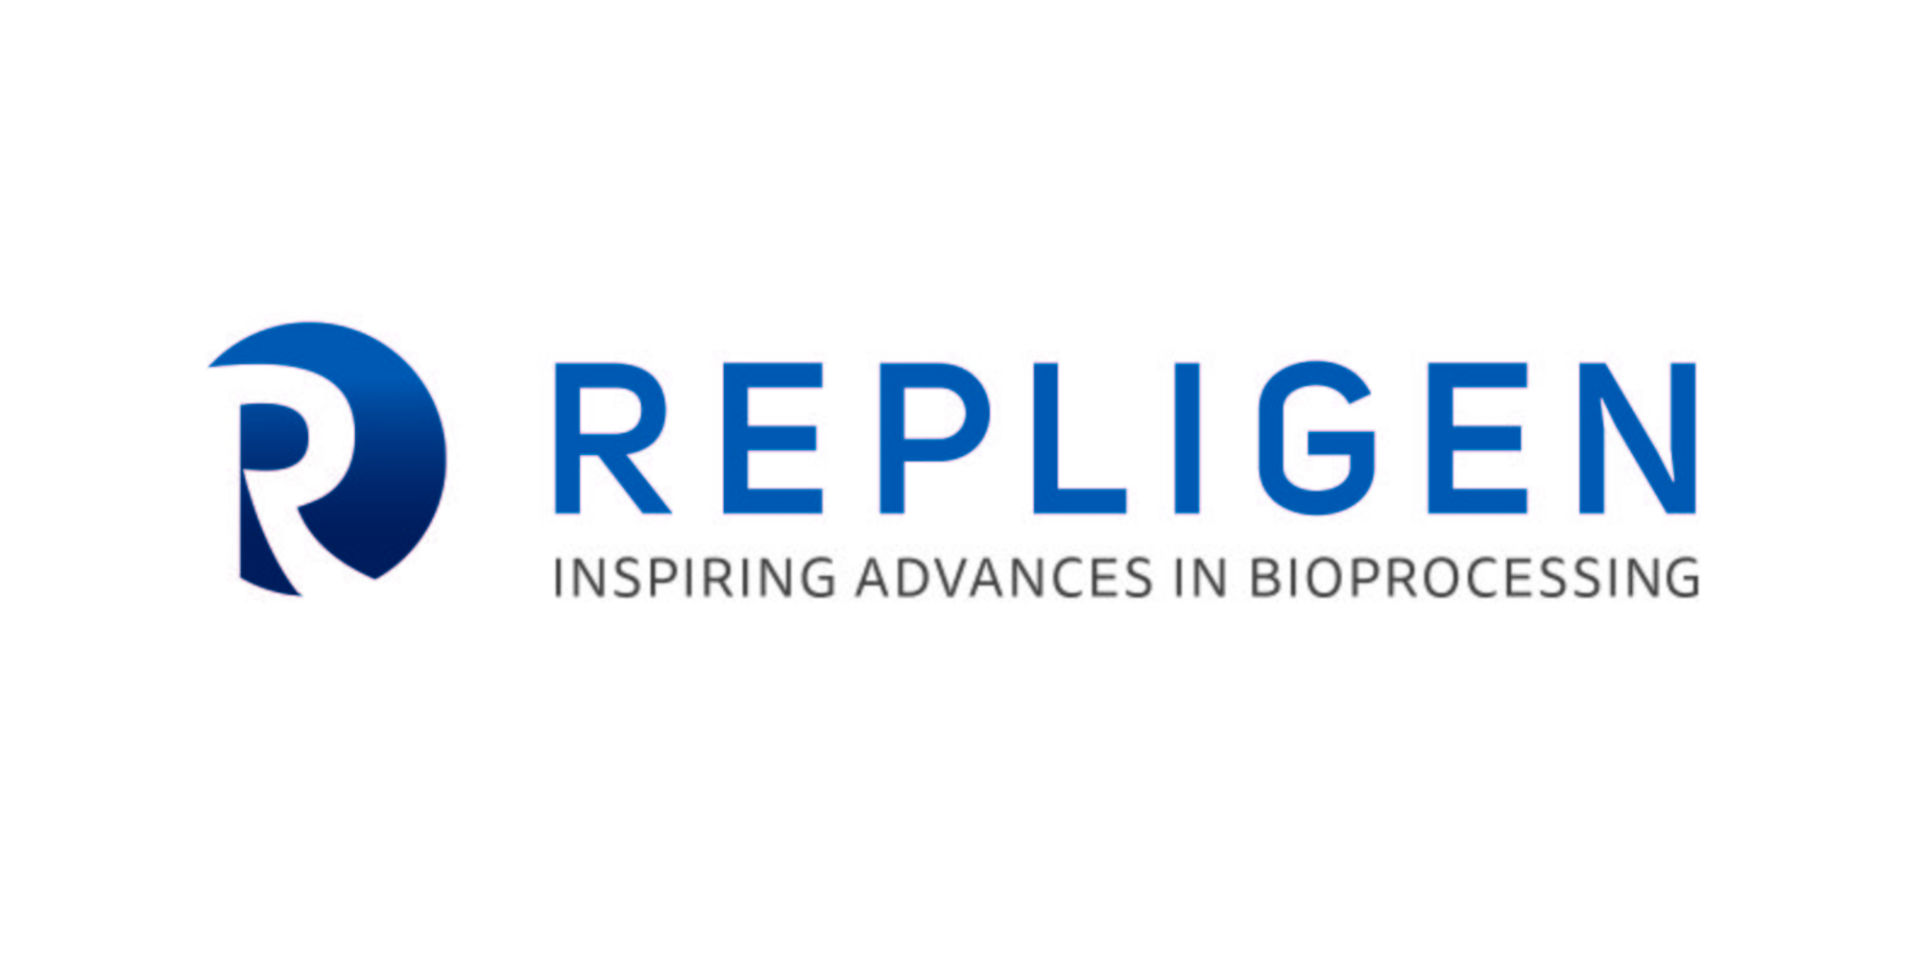 Repligen | Inspiring advances in bioprocessing